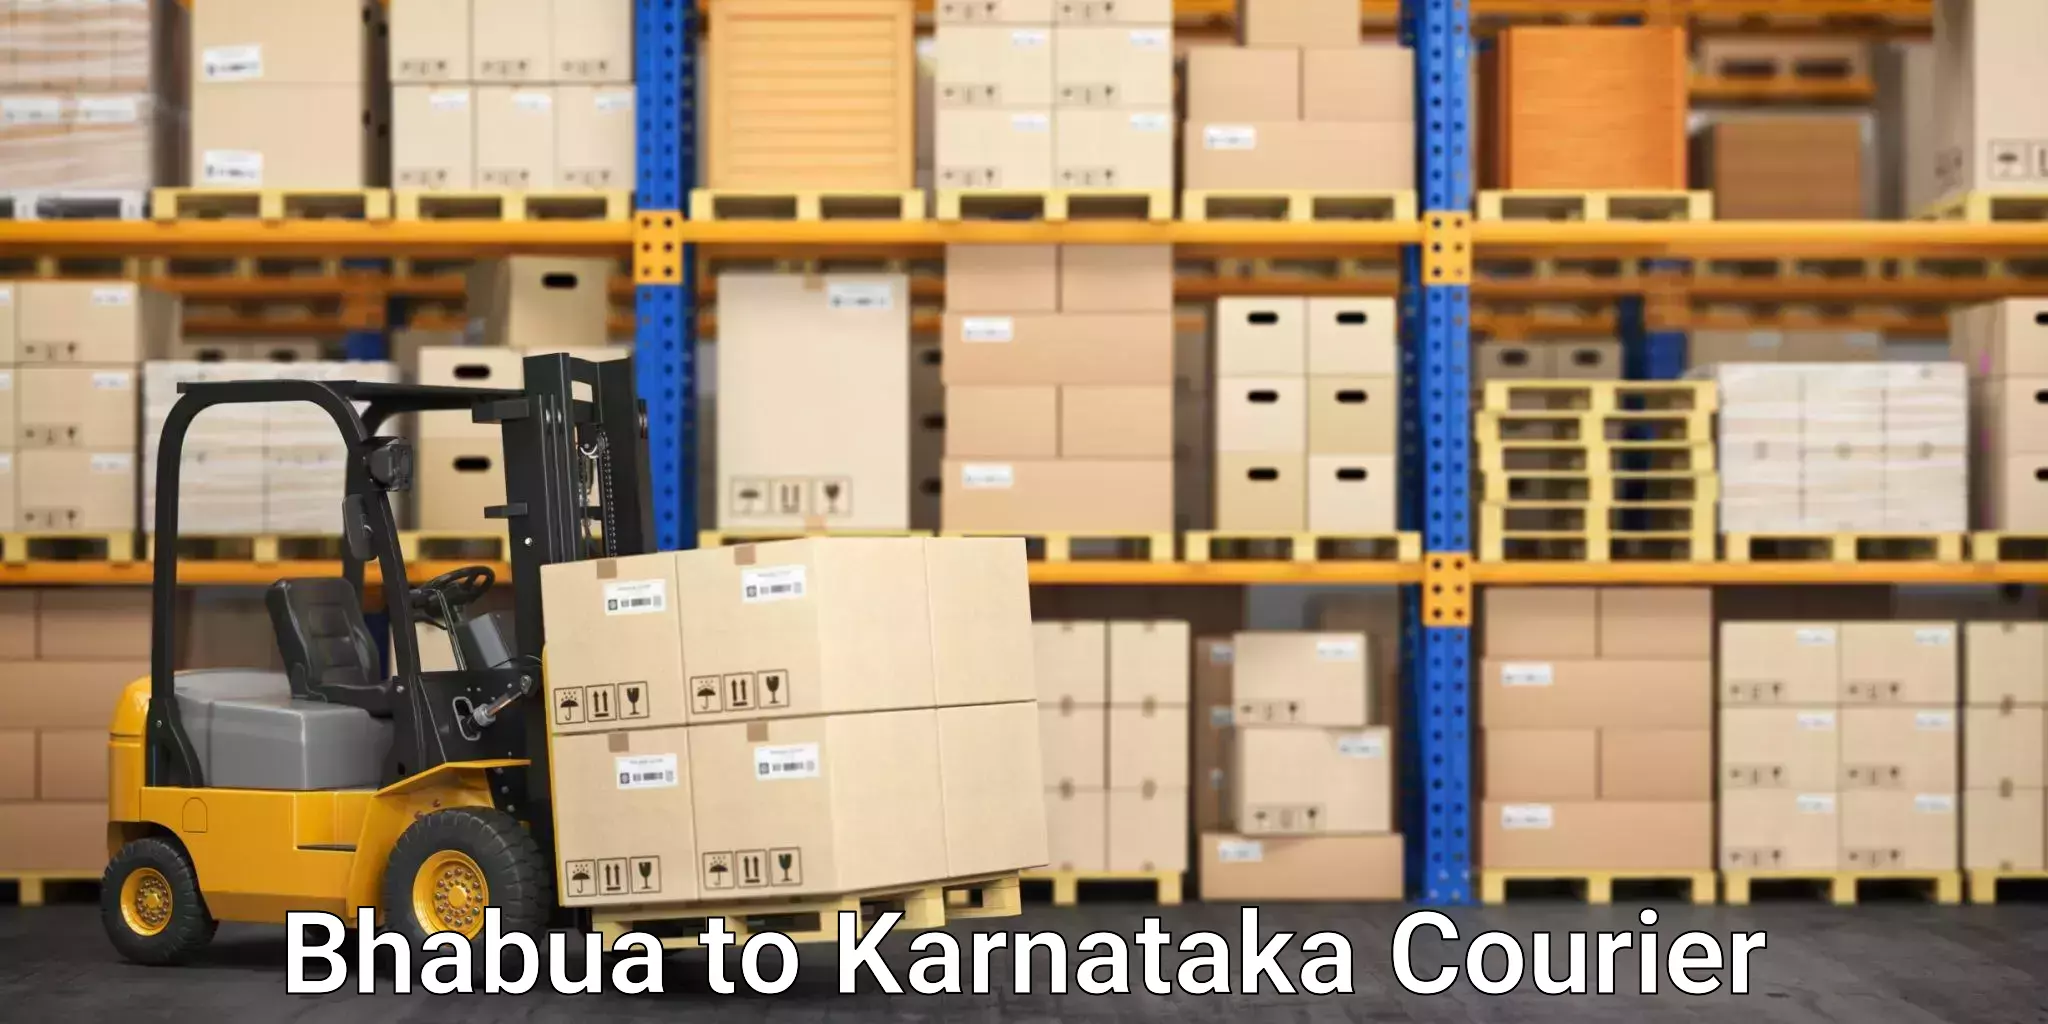 Furniture moving plans Bhabua to Karnataka